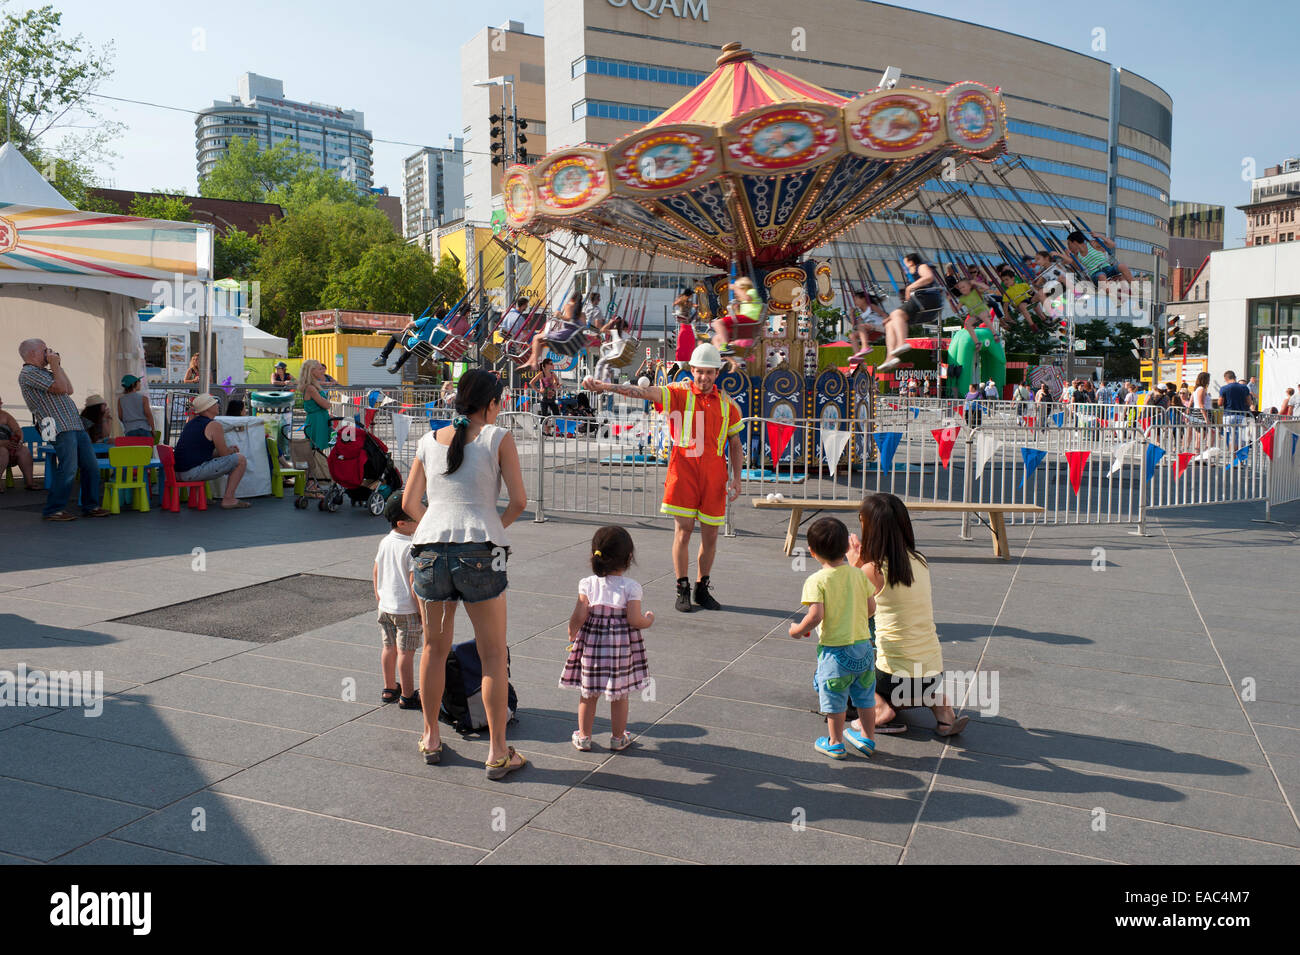 Juggler entertaining children on Place des Festivals, Montreal, province of Quebec, Canada. Stock Photo